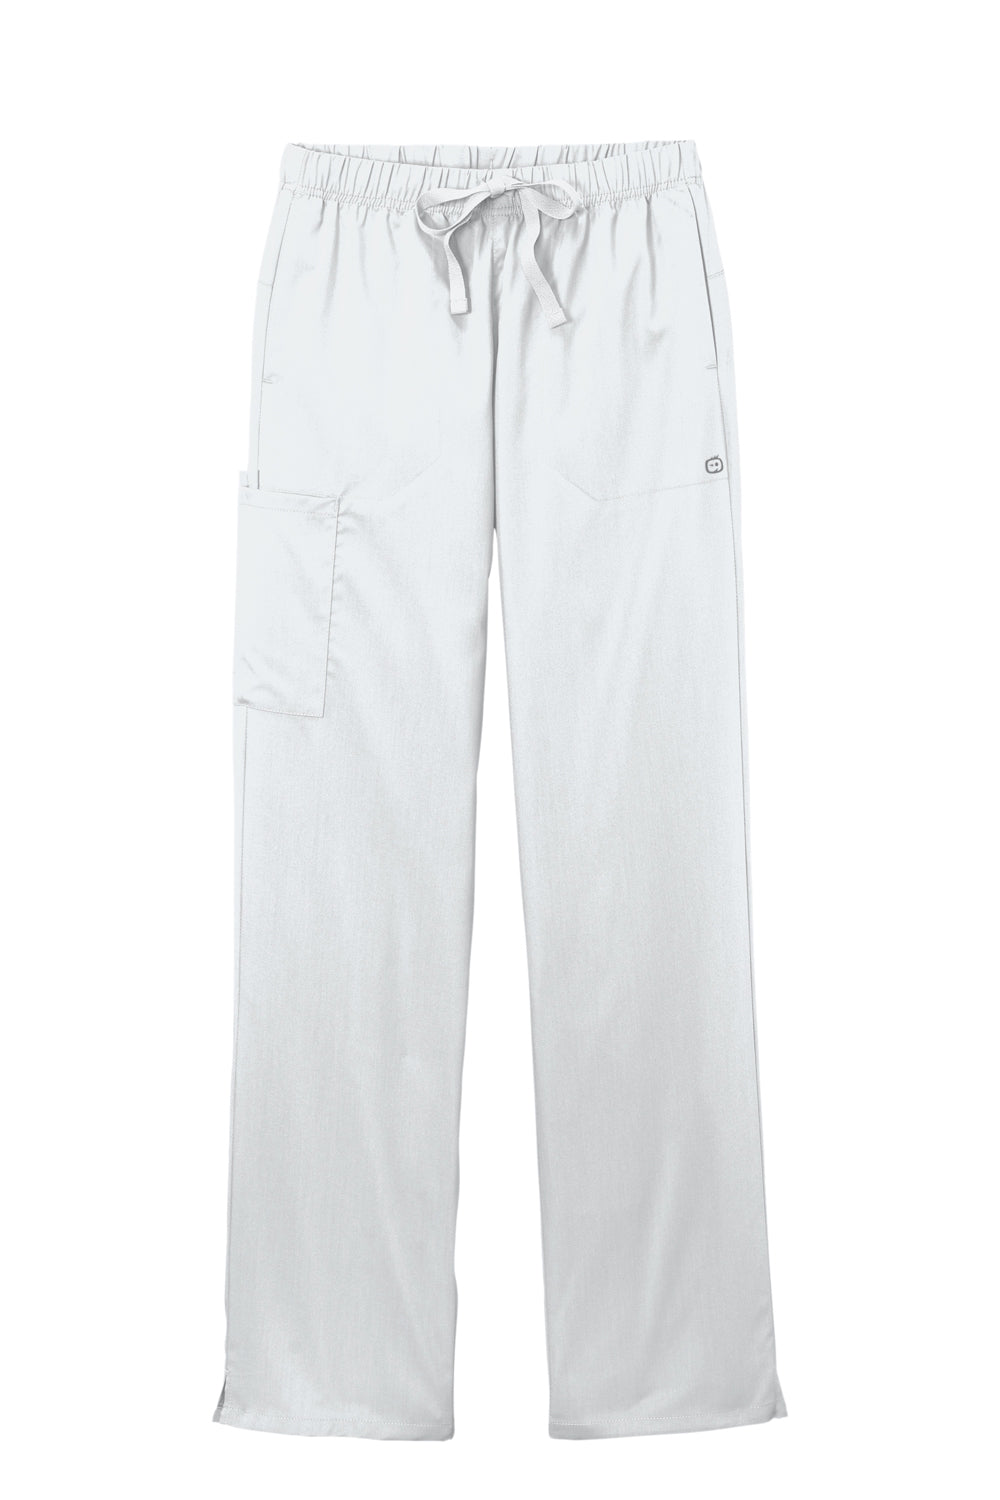 Wonderwink WW4158 Premiere Flex Cargo Pants w/ Pockets White Flat Front